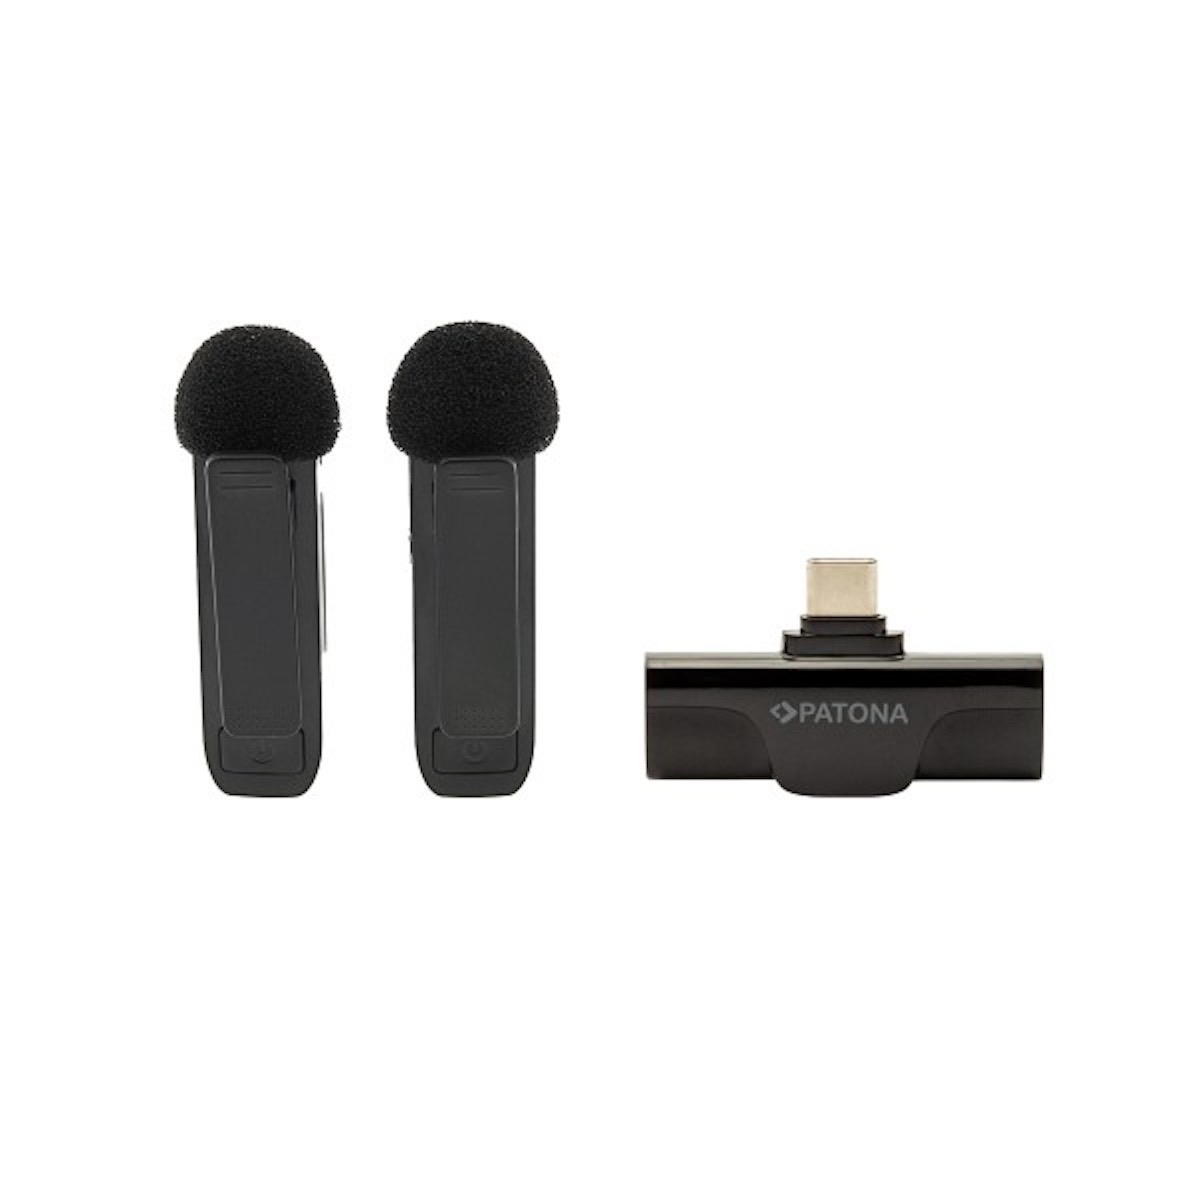 Patona Premium Ansteck-Lavalier-Mikrofone für Smartphones mit USB-C